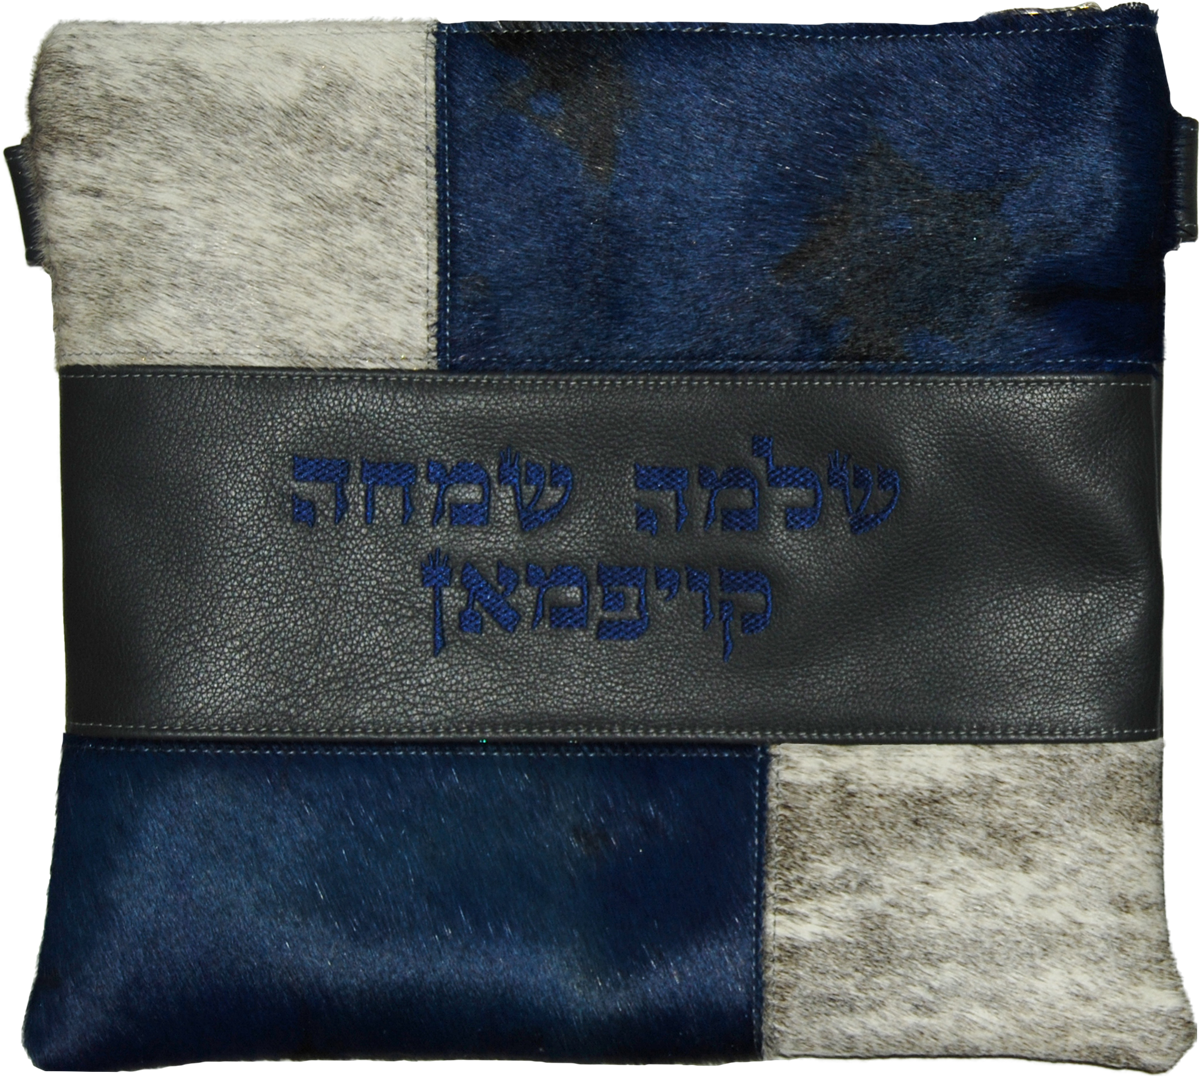 Colorblock handsewn leather Tallis and Tefillin bag